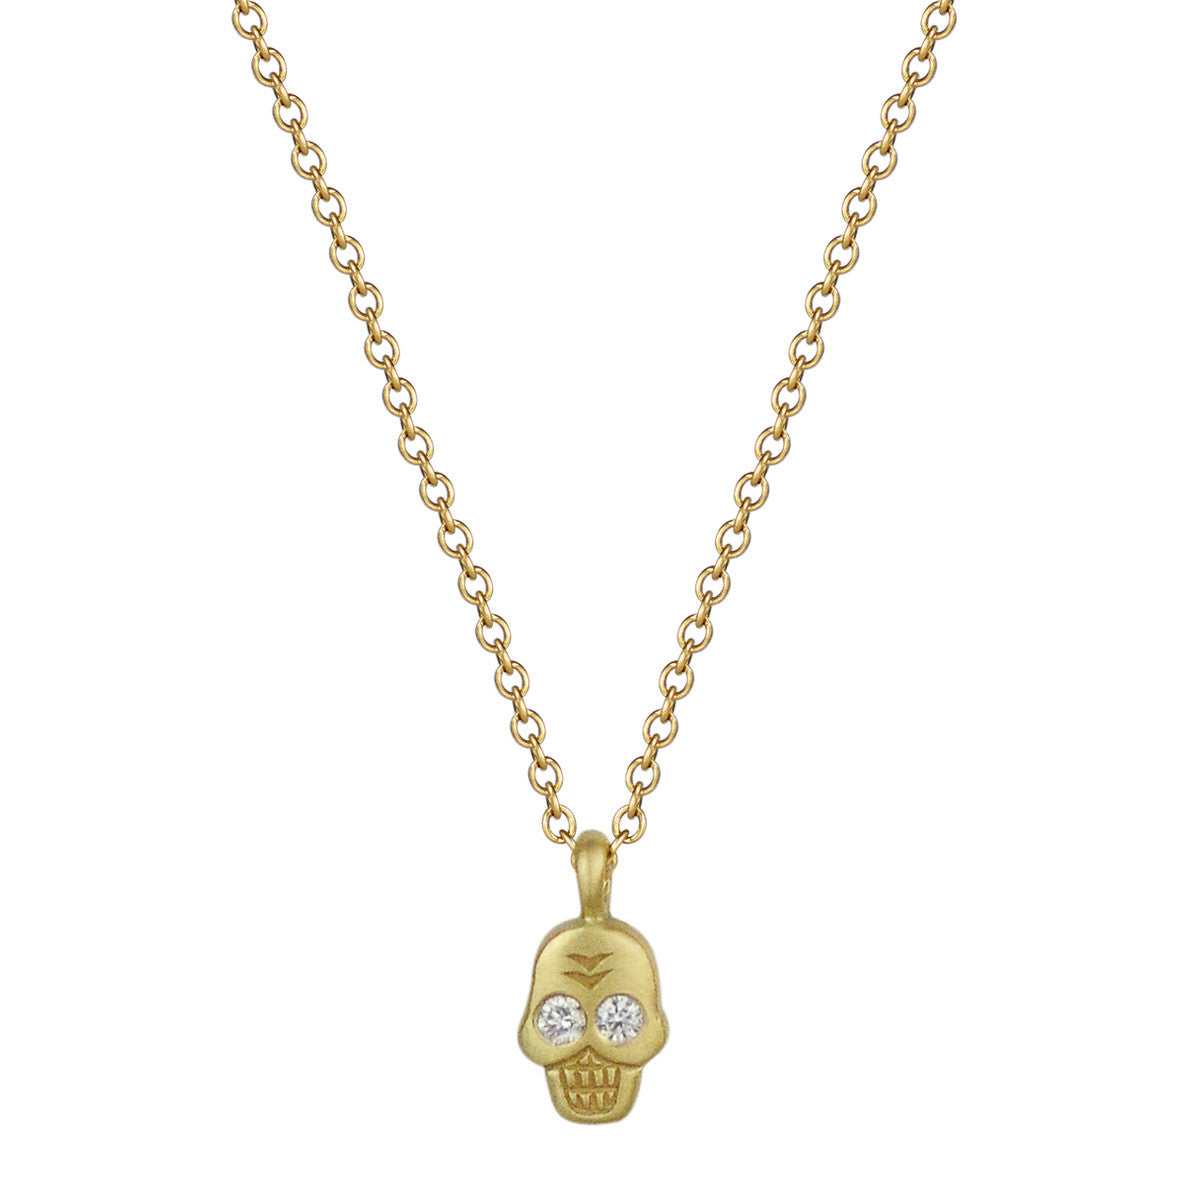 18K Gold Mini Skull Pendant with Diamond Eyes